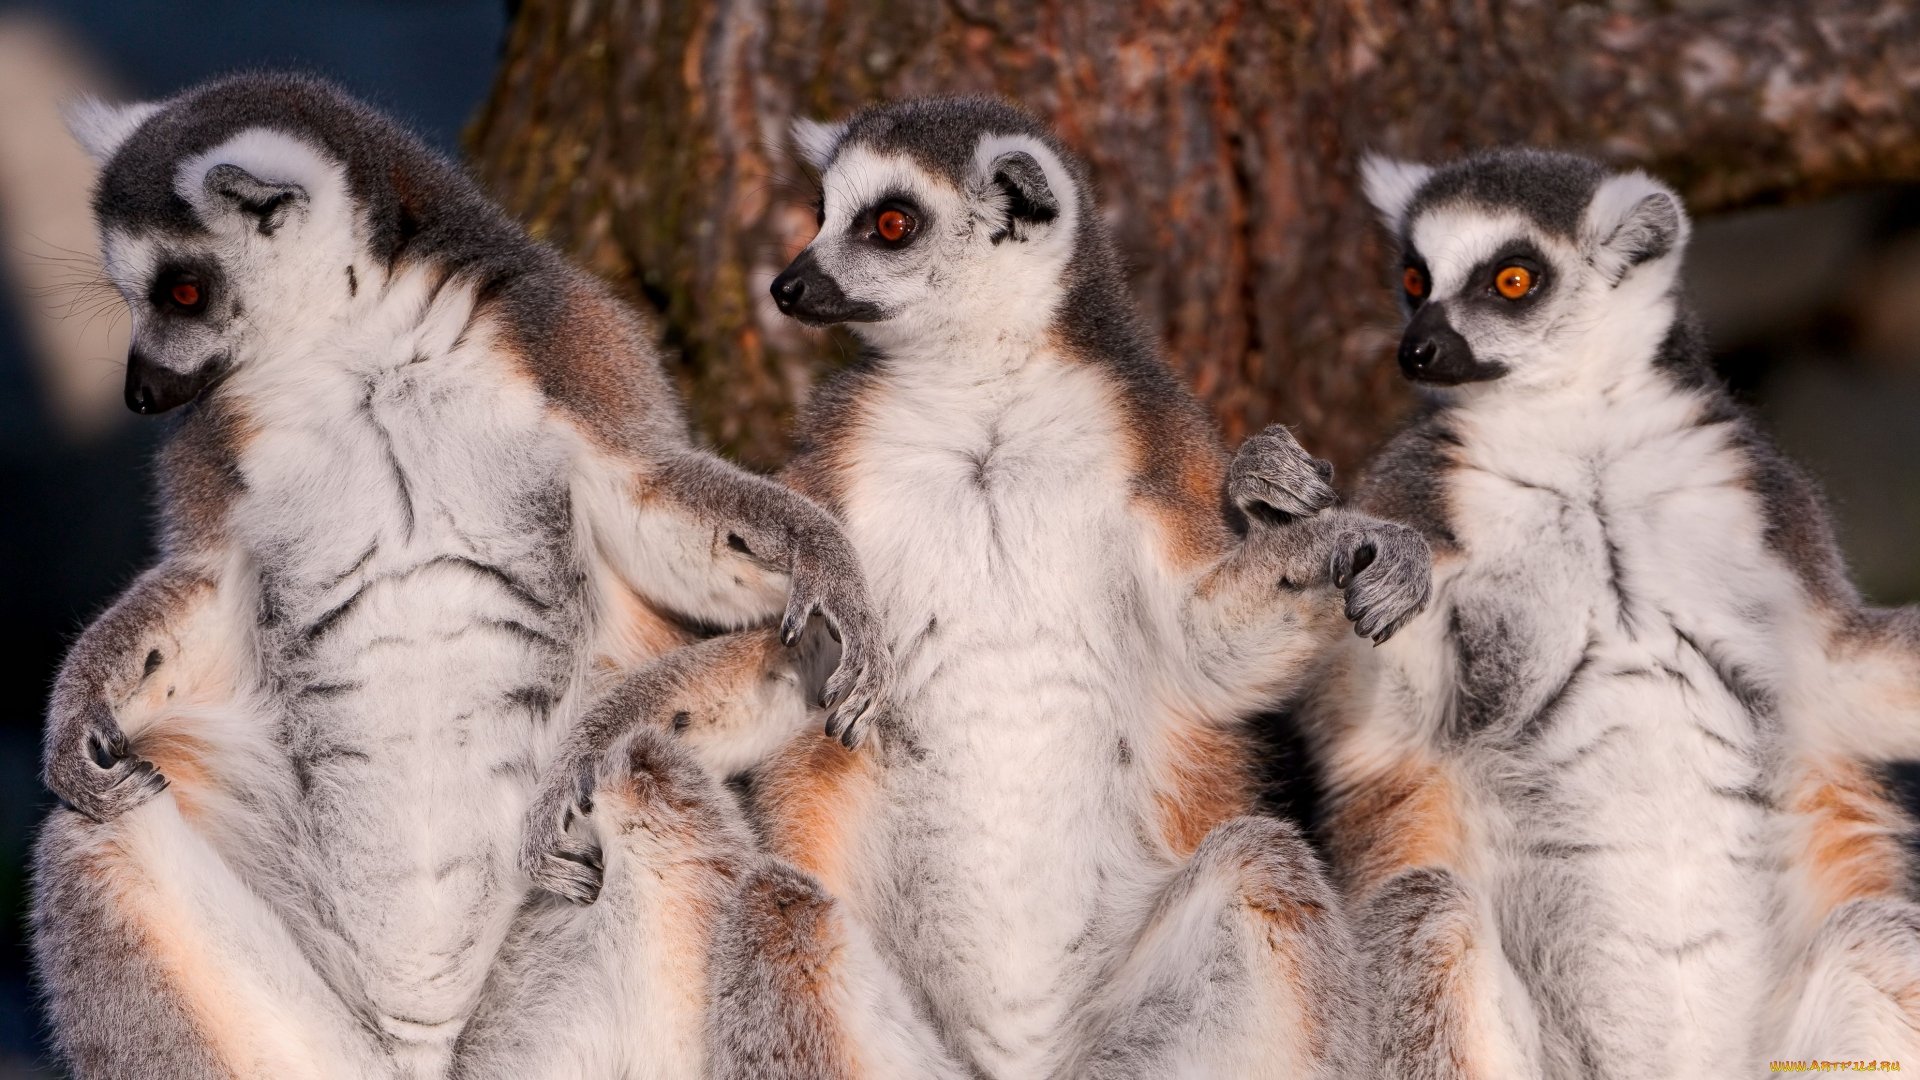 Lemur background wallpaper